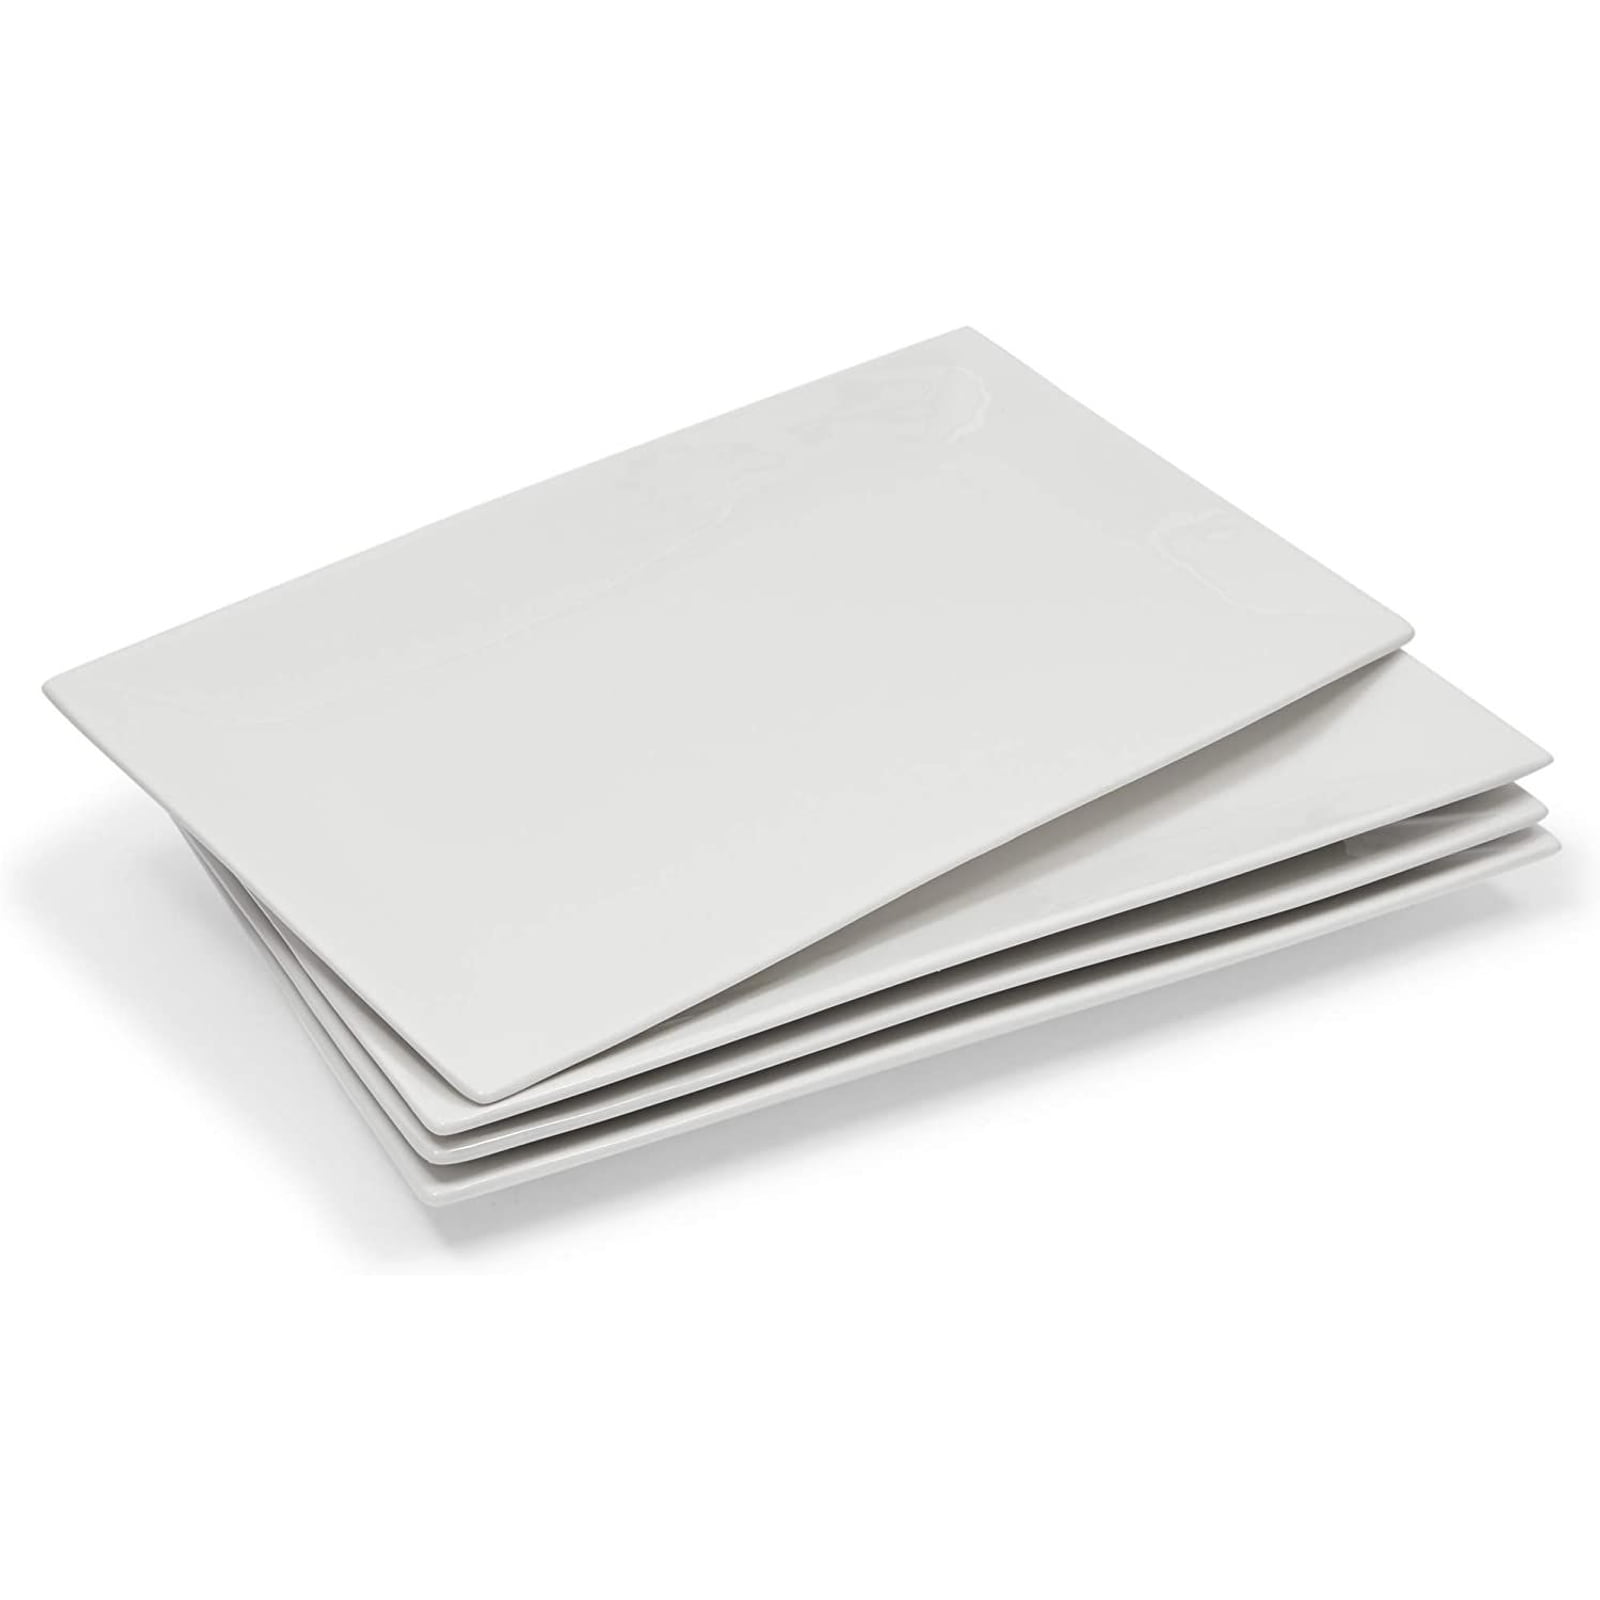 Natural White DOWAN Porcelain Serving Platters/Rectangular Plates 4 Packs